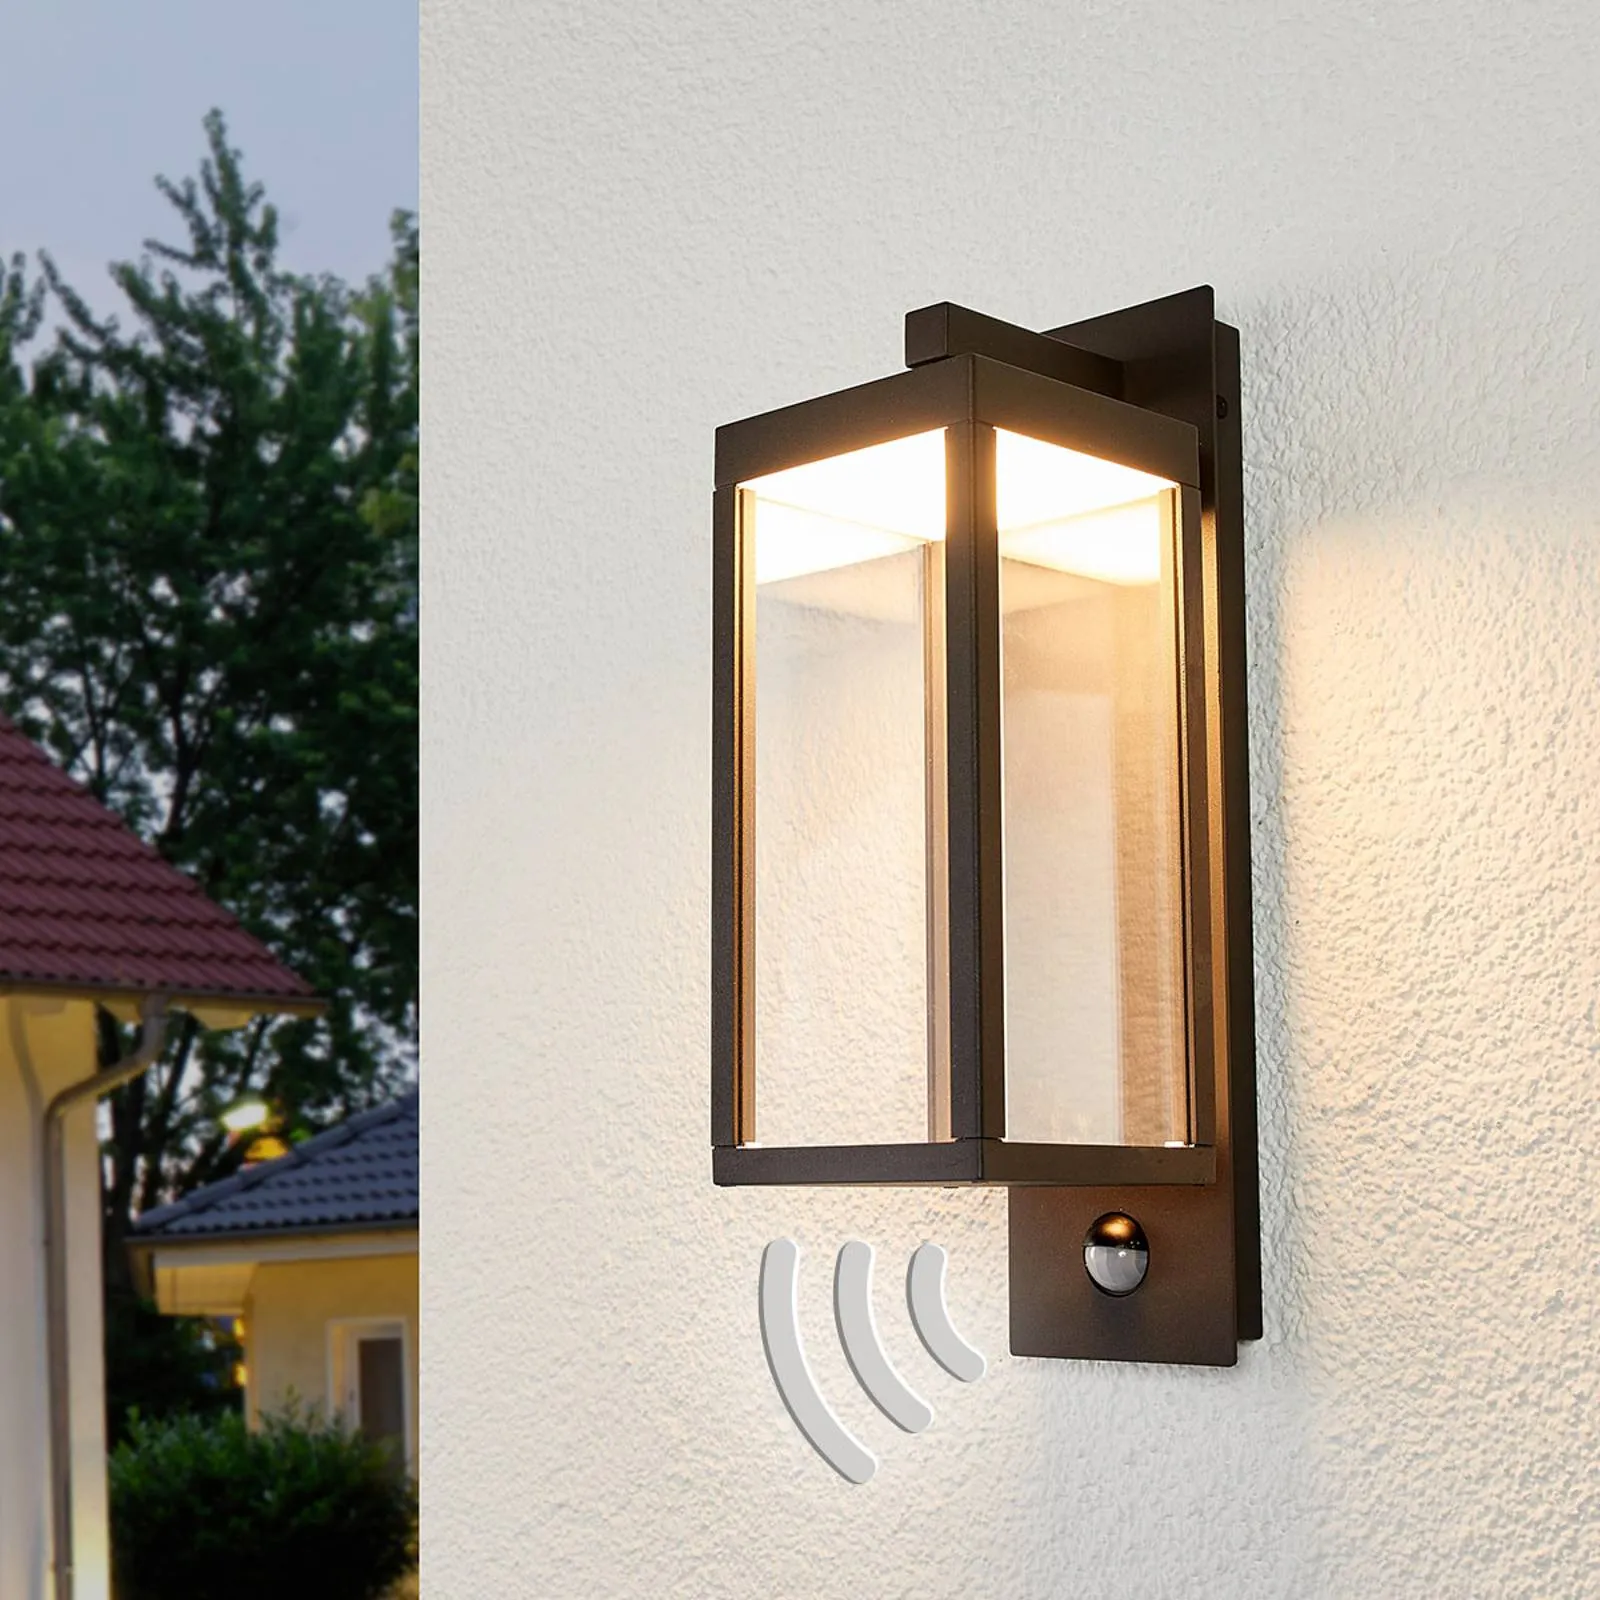 Ferdinand motion sensor outdoor wall lamp, LED